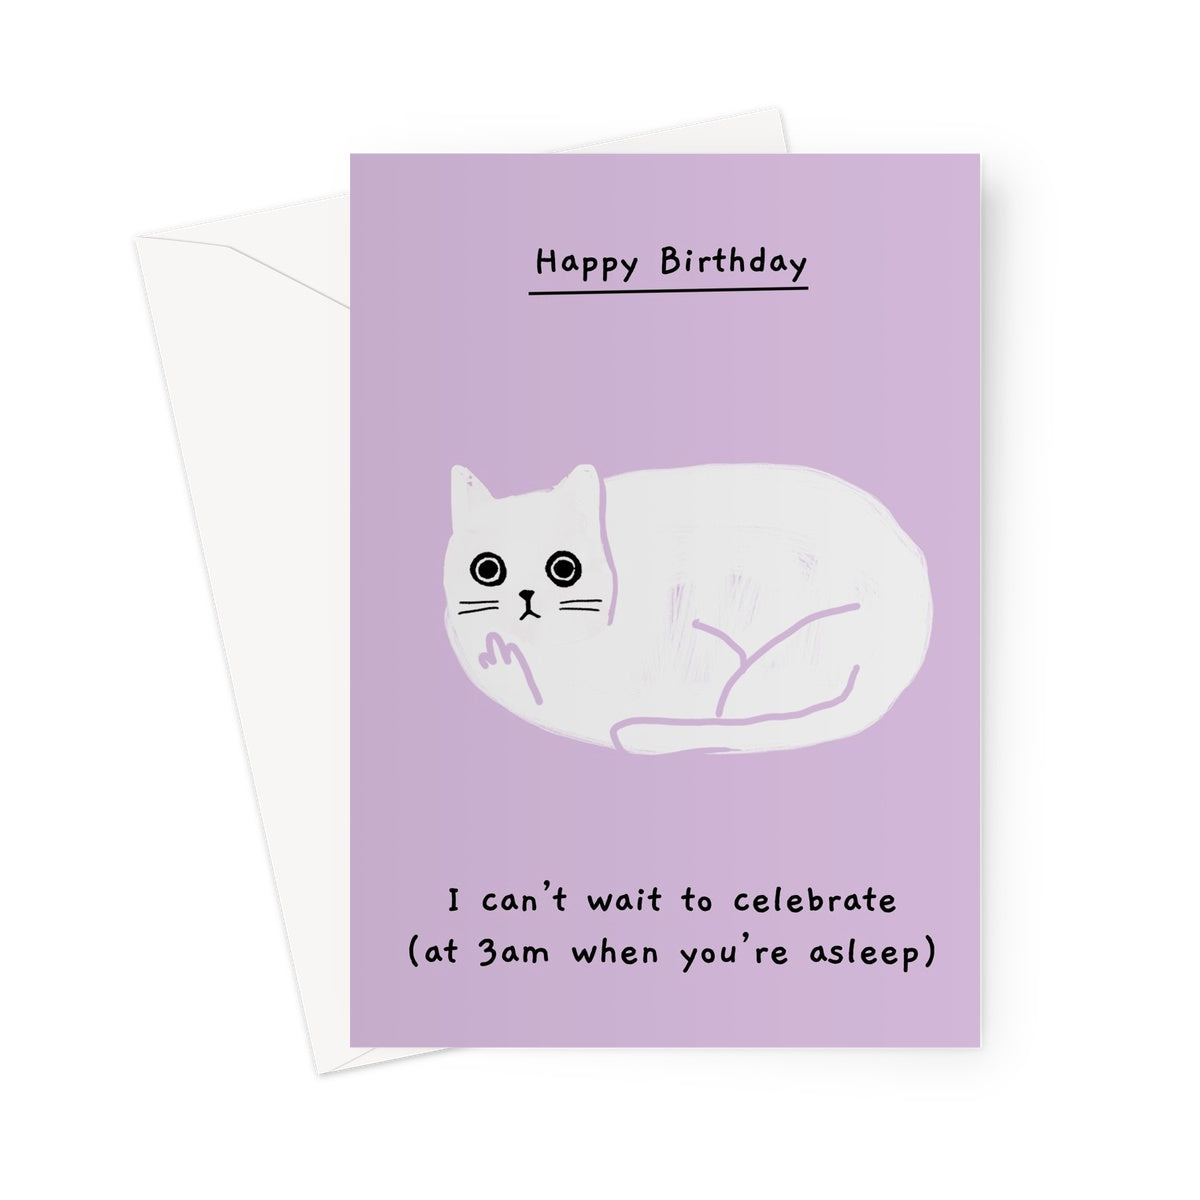 Ken the cat 3am celebration birthday card purple